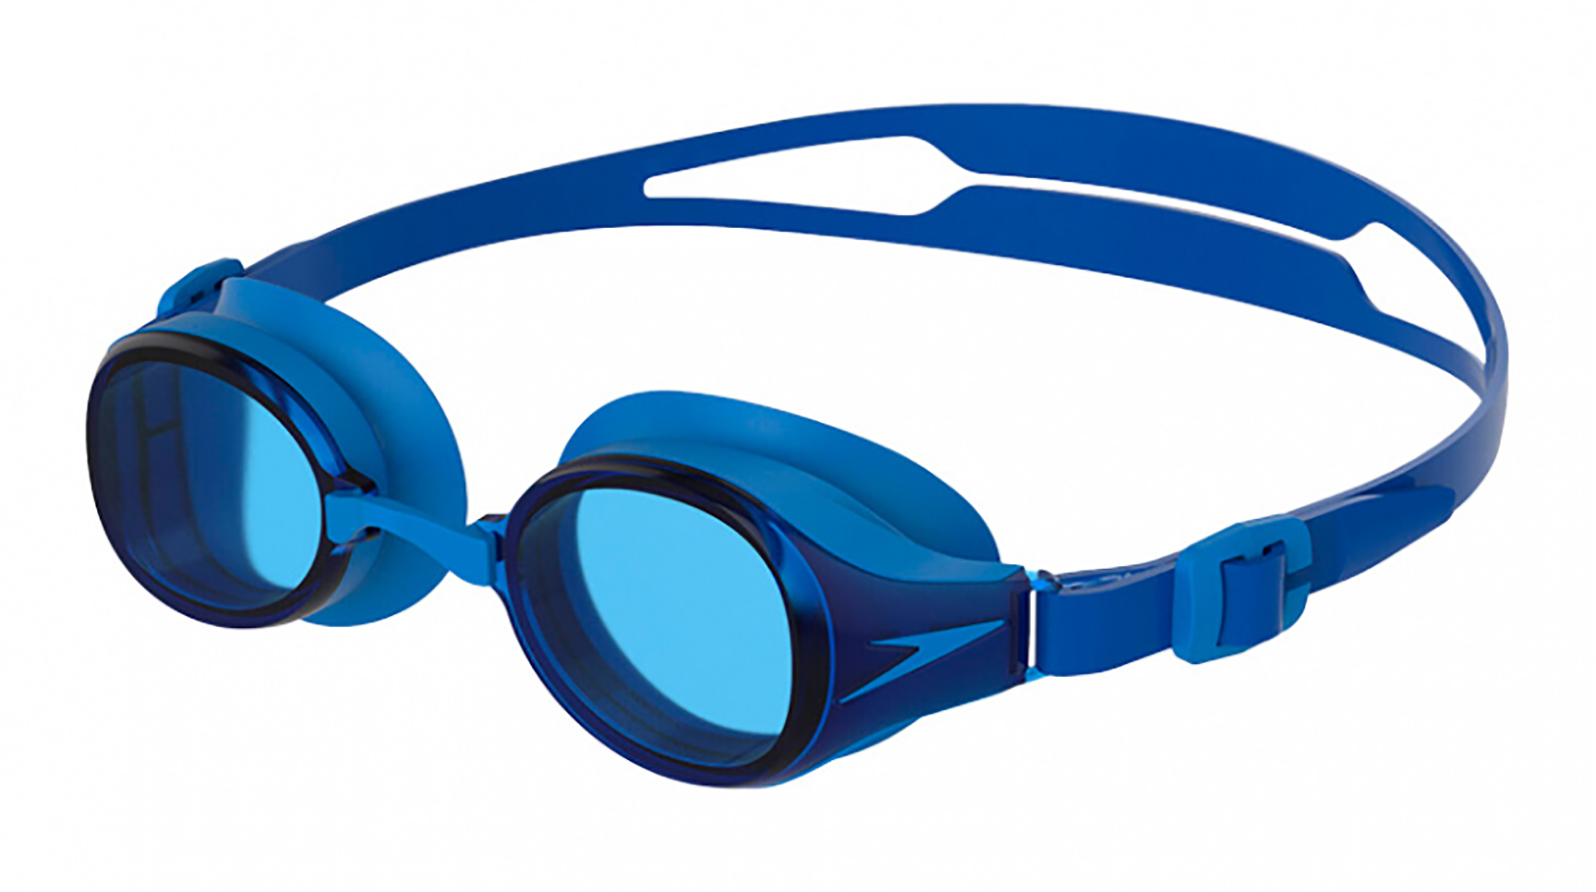 Speedo Очки для плавания Hydropure Optical F809 -5.0 speedo очки для плавания hydropure optical f809 5 5